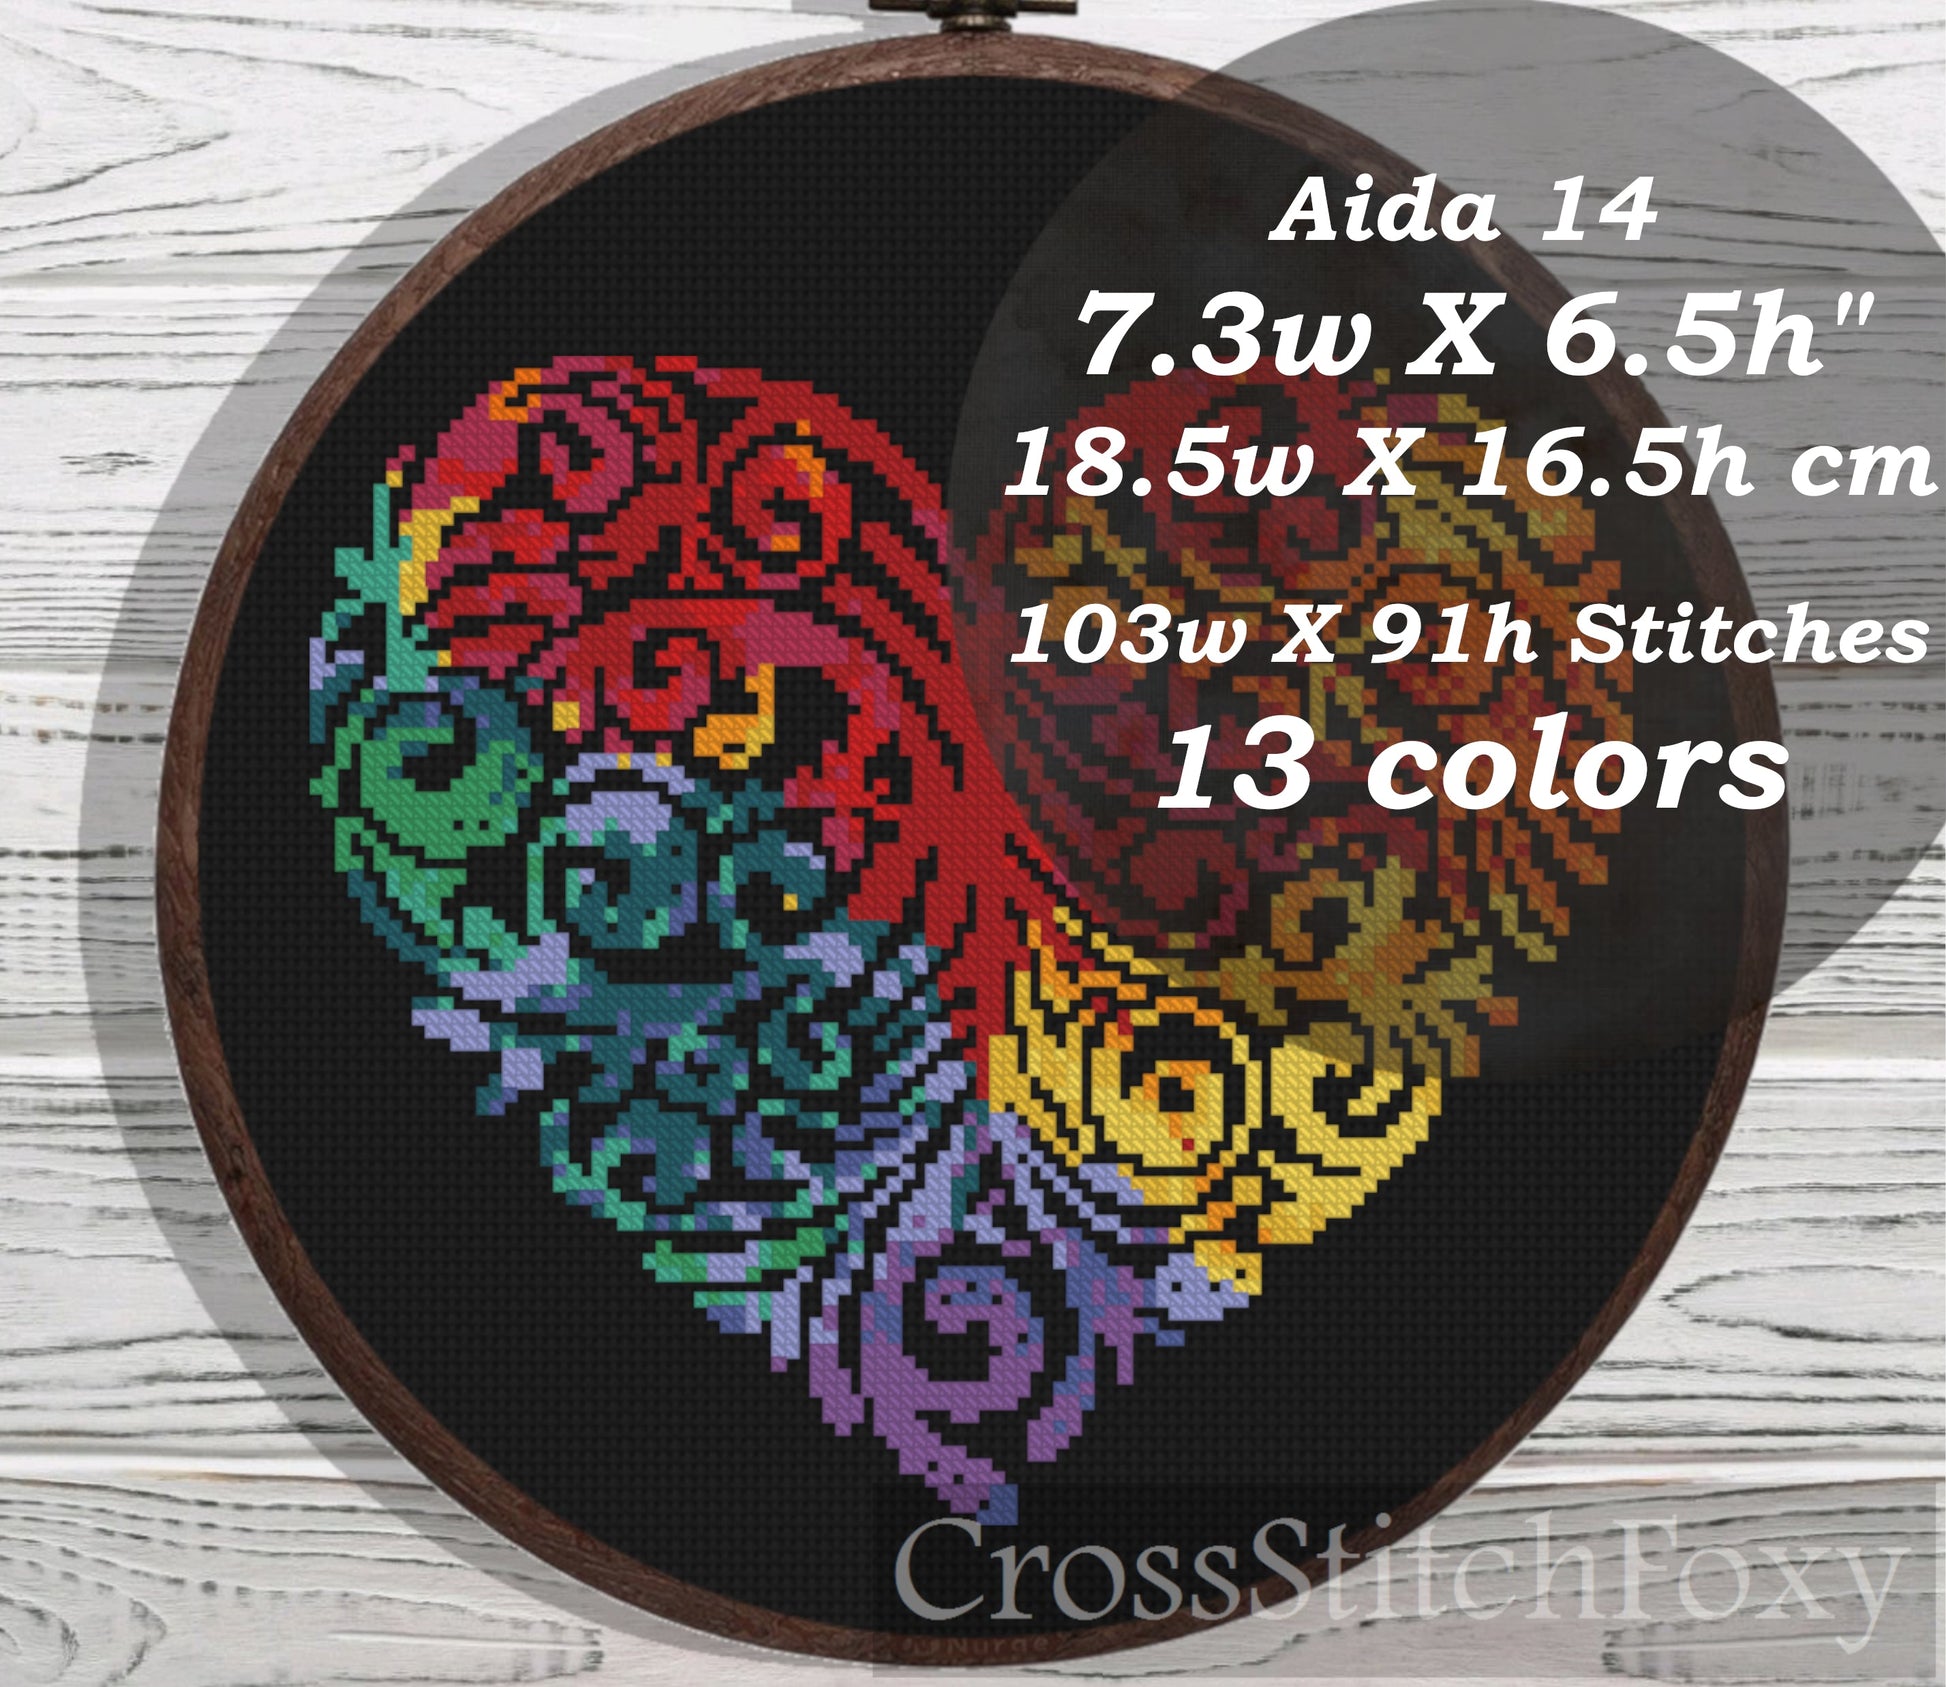 Watercolor Floral Heart cross stitch pattern